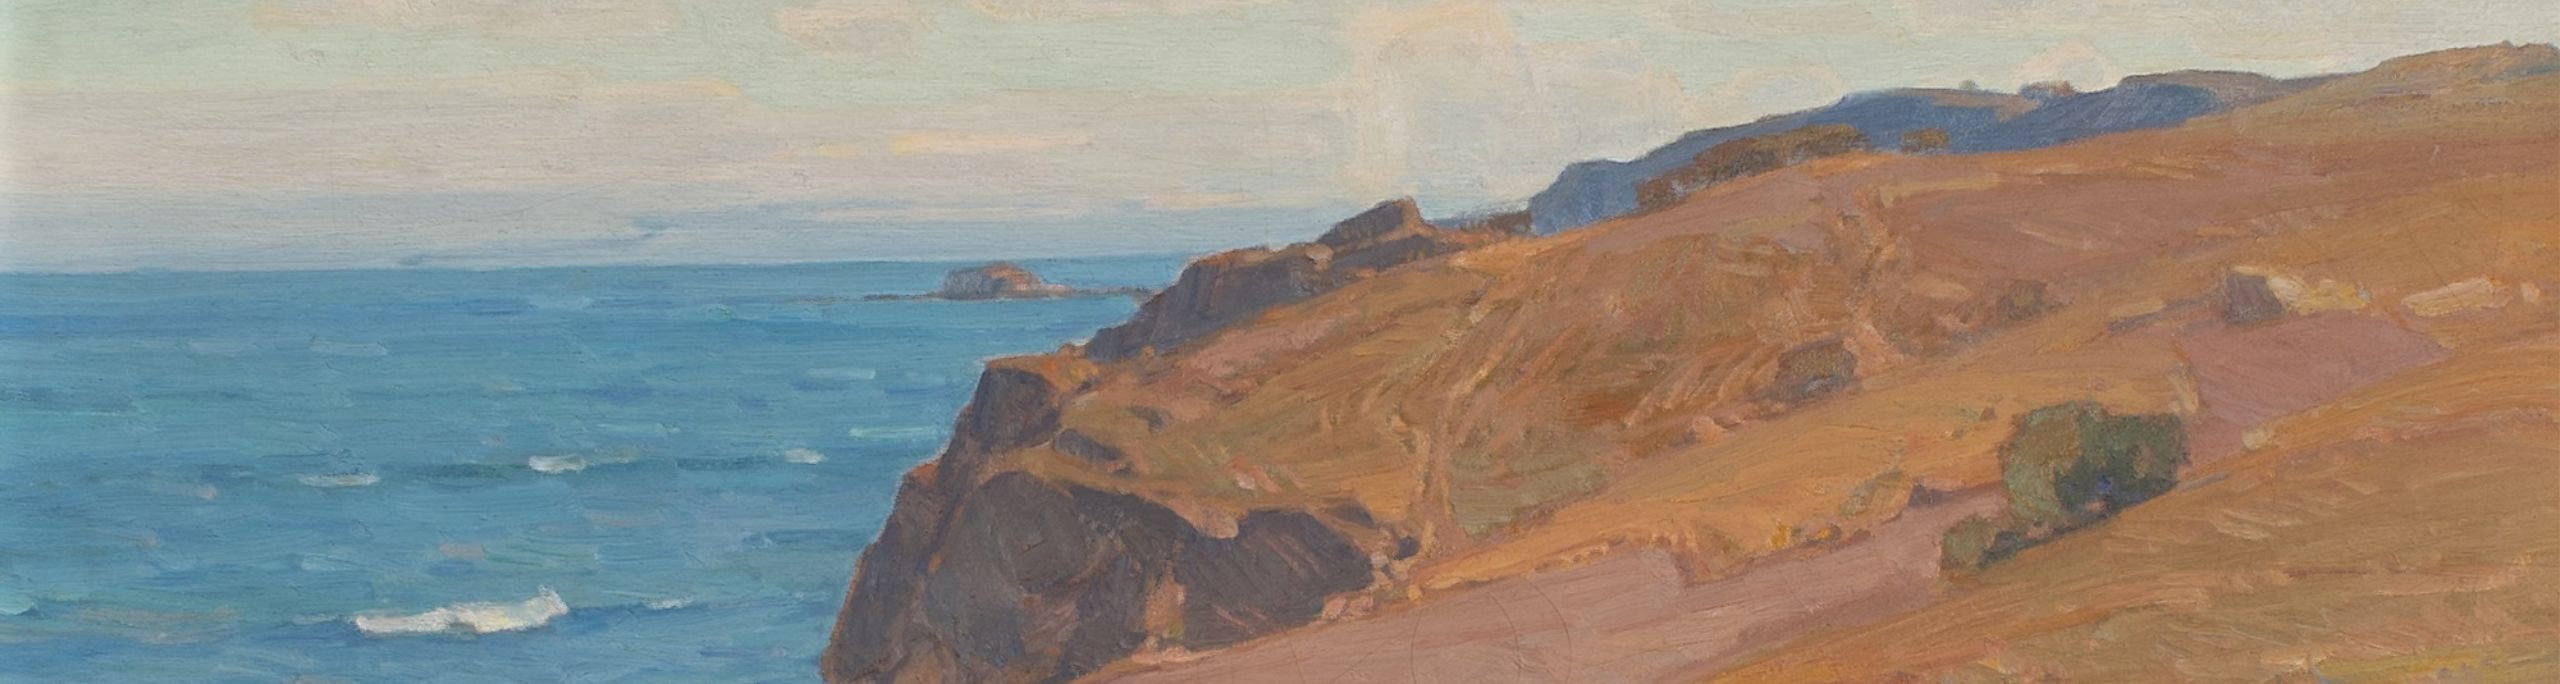 William Wendt & the California Landscape